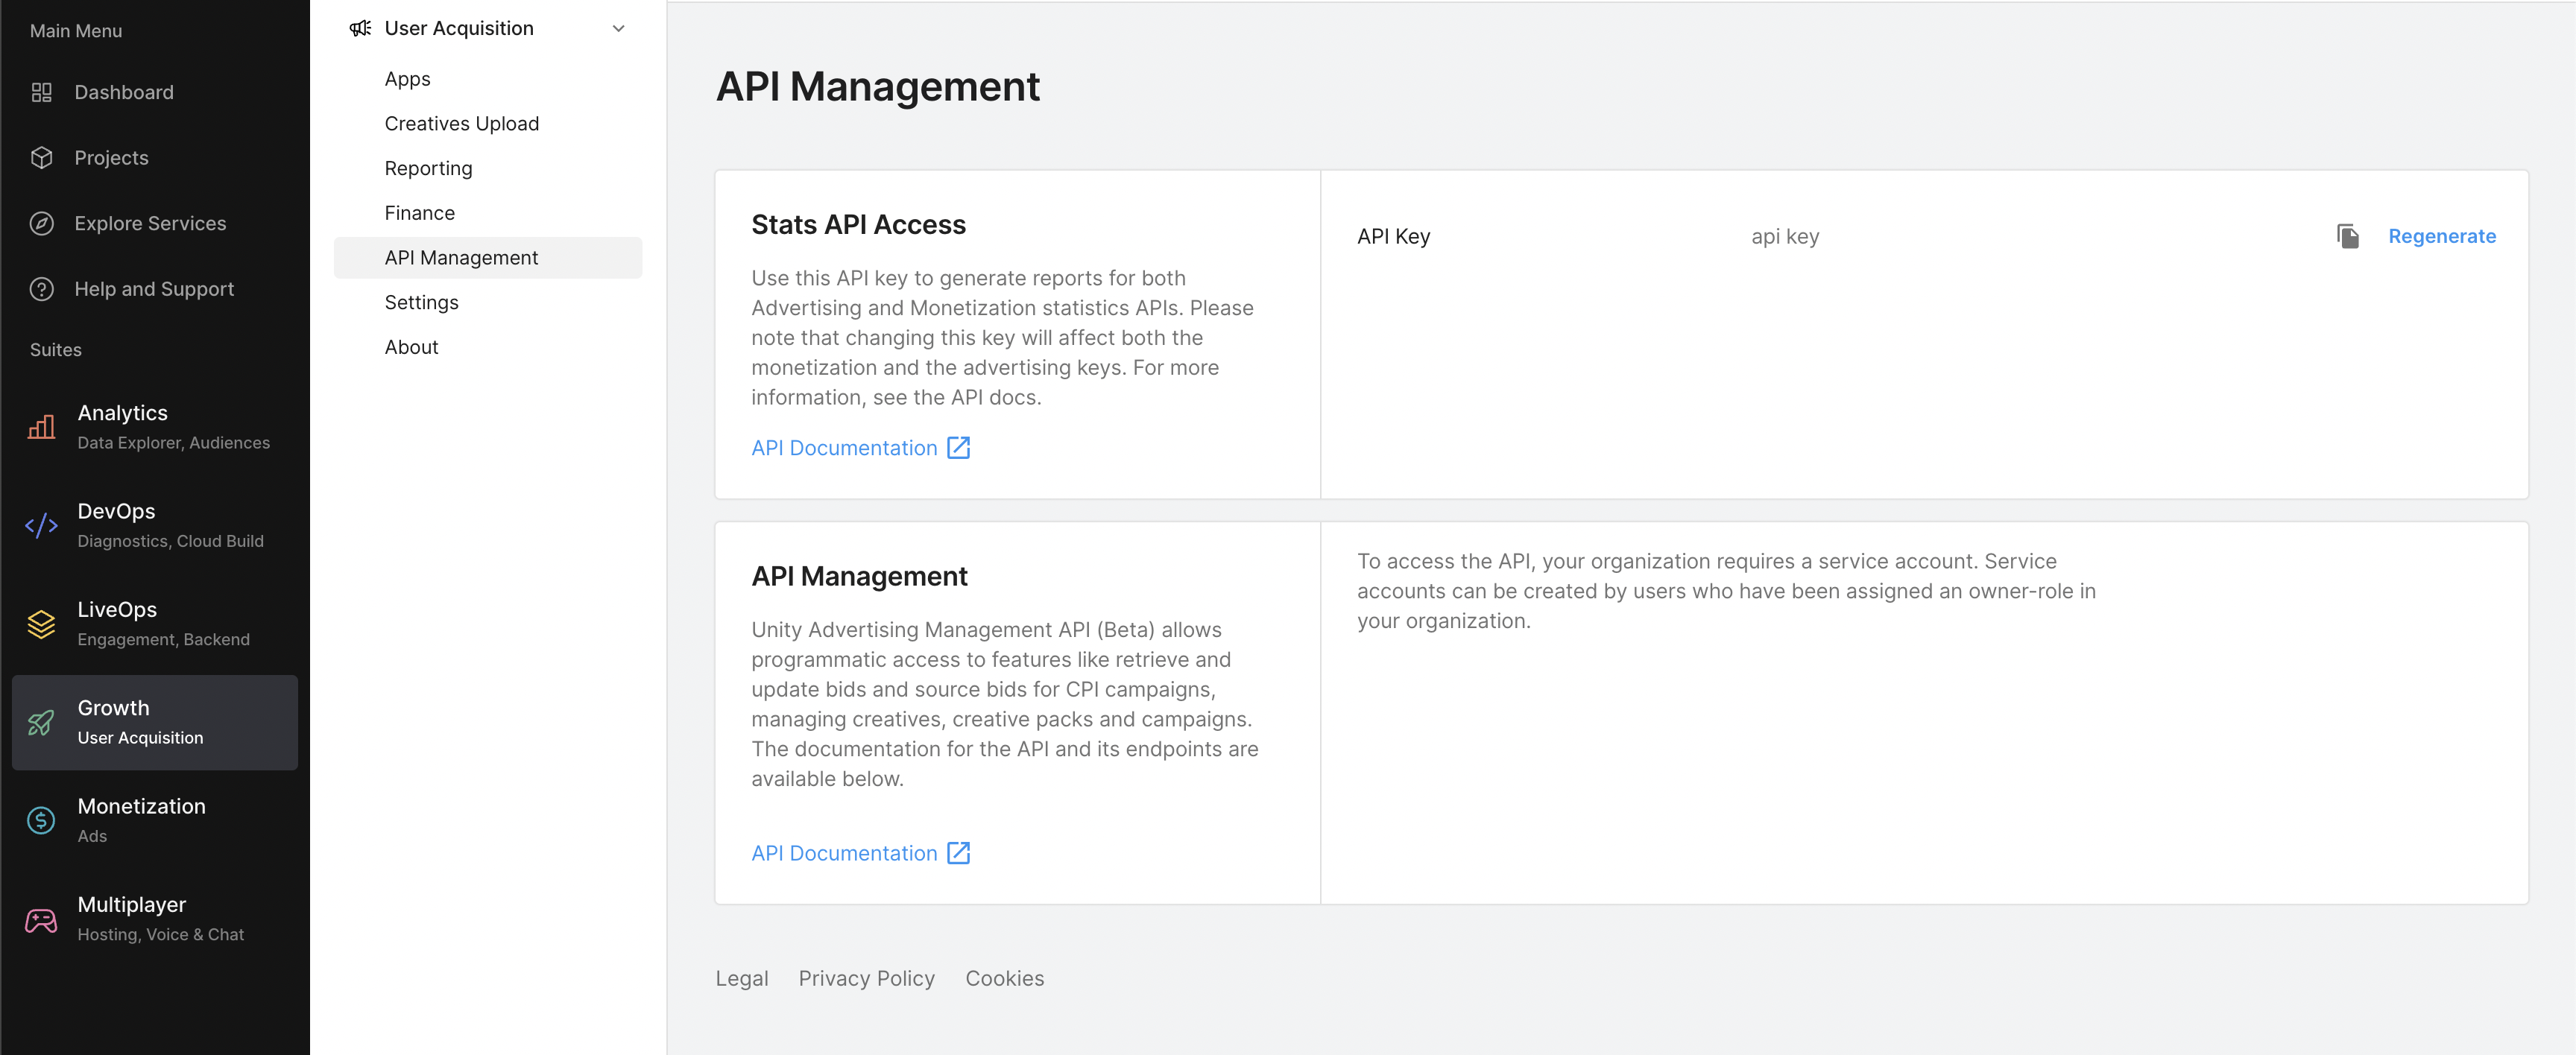 Copy the API Key for the Stats API Access